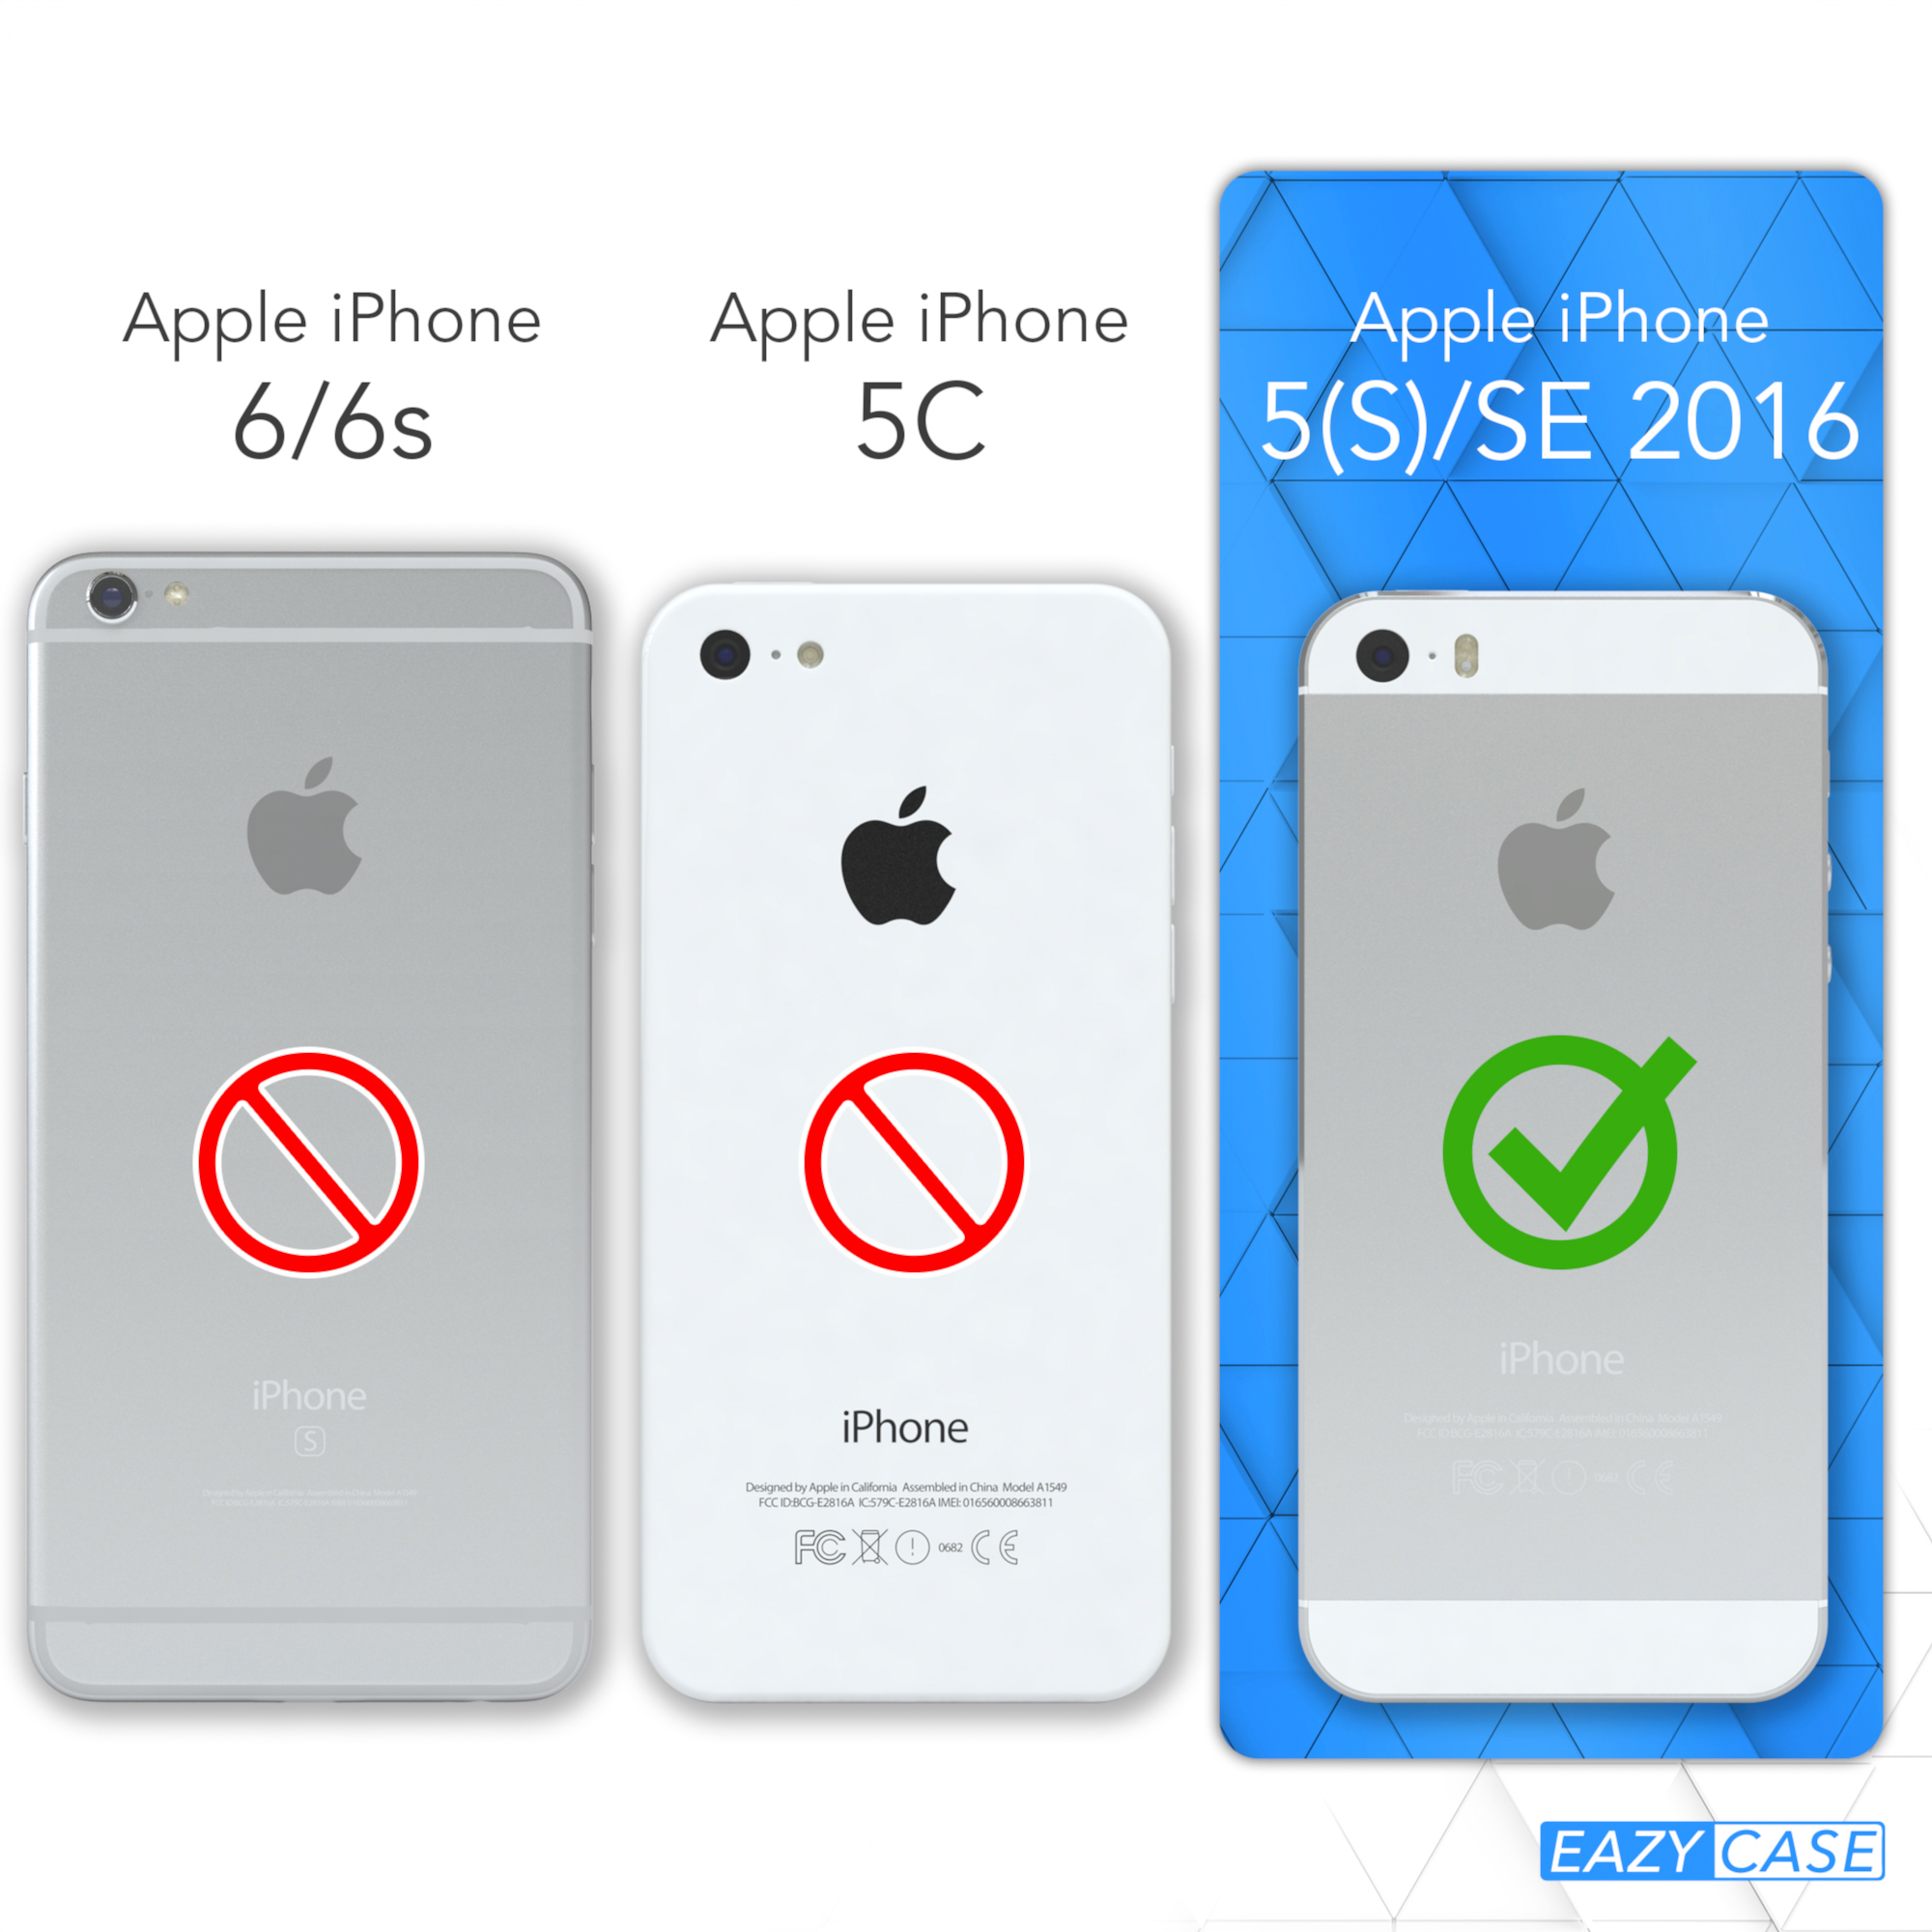 / + Apple, Metall Anthrazit iPhone 2016, EAZY SE 5S, iPhone Umhängetasche, Schwarz, Kordel CASE extra Handykette Grau 5